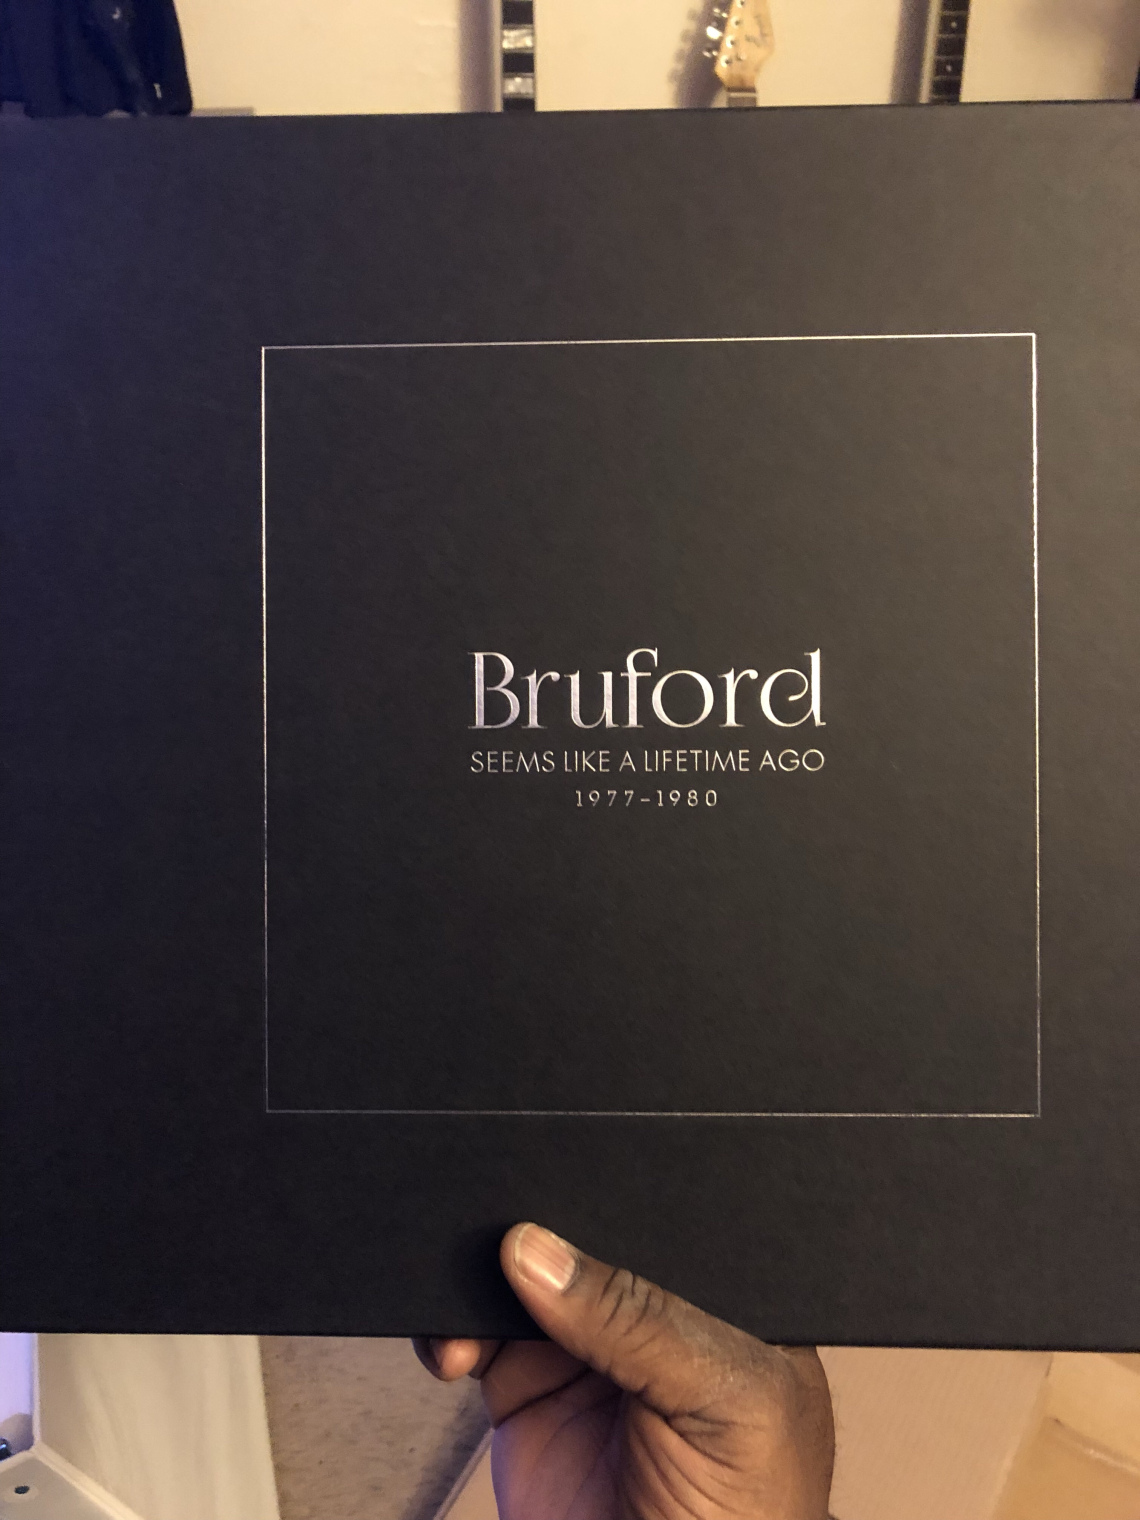 Album Review: “Bruford, Seems Like A Lifetime Ago (1977-1980)” Box ...